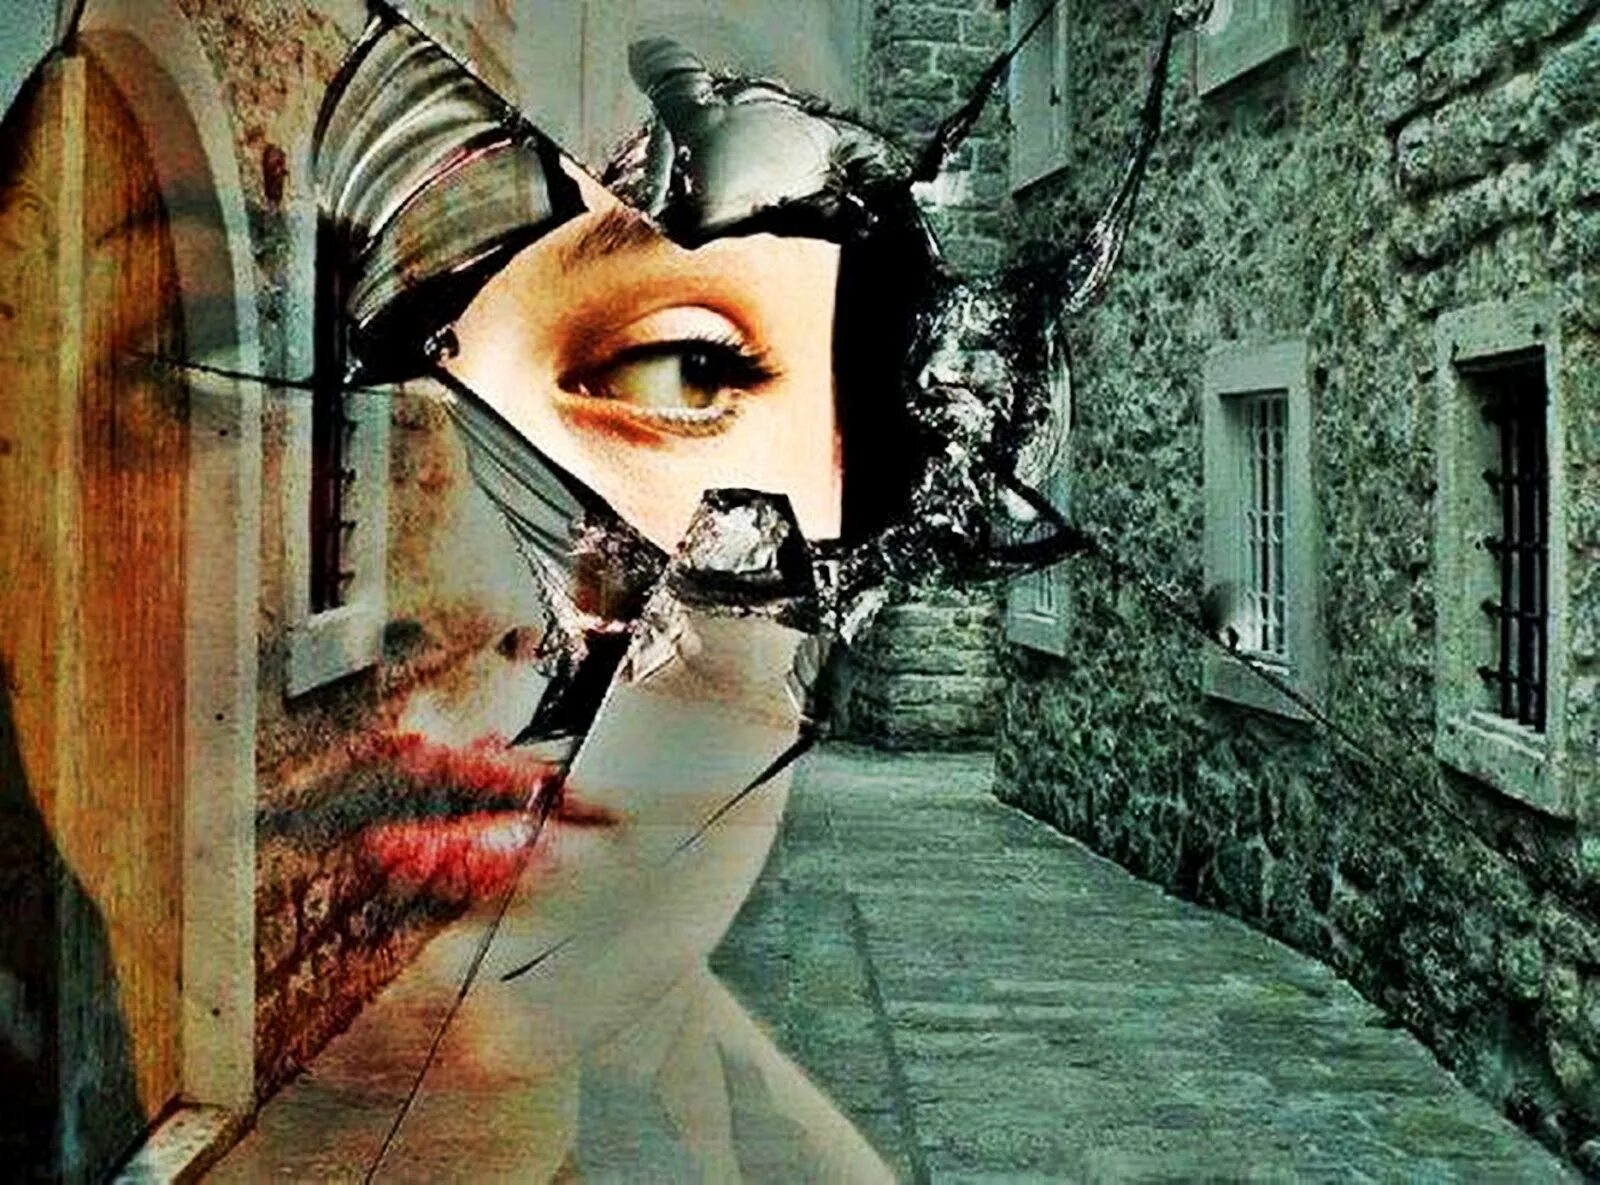 Ь жизни. Отражение в зеркале сюрреализм. Лицо в разбитом зеркале. Сюрреализм маски. Глаз в разбитом зеркале.